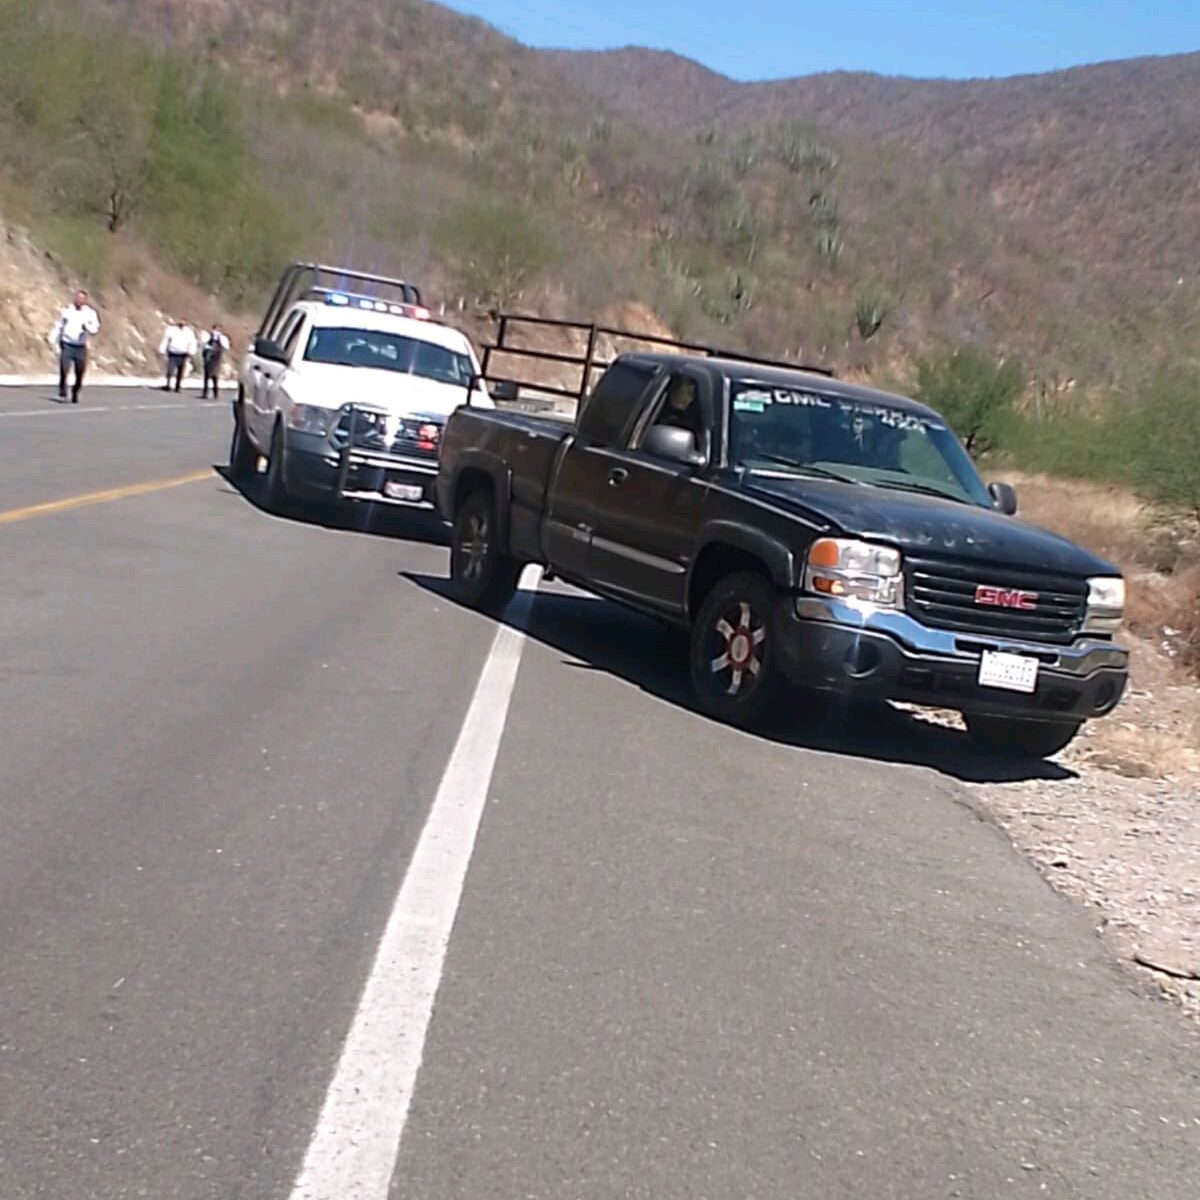 Asalto a mano armada en autopista de Occidente: roban tres vehículos nuevos